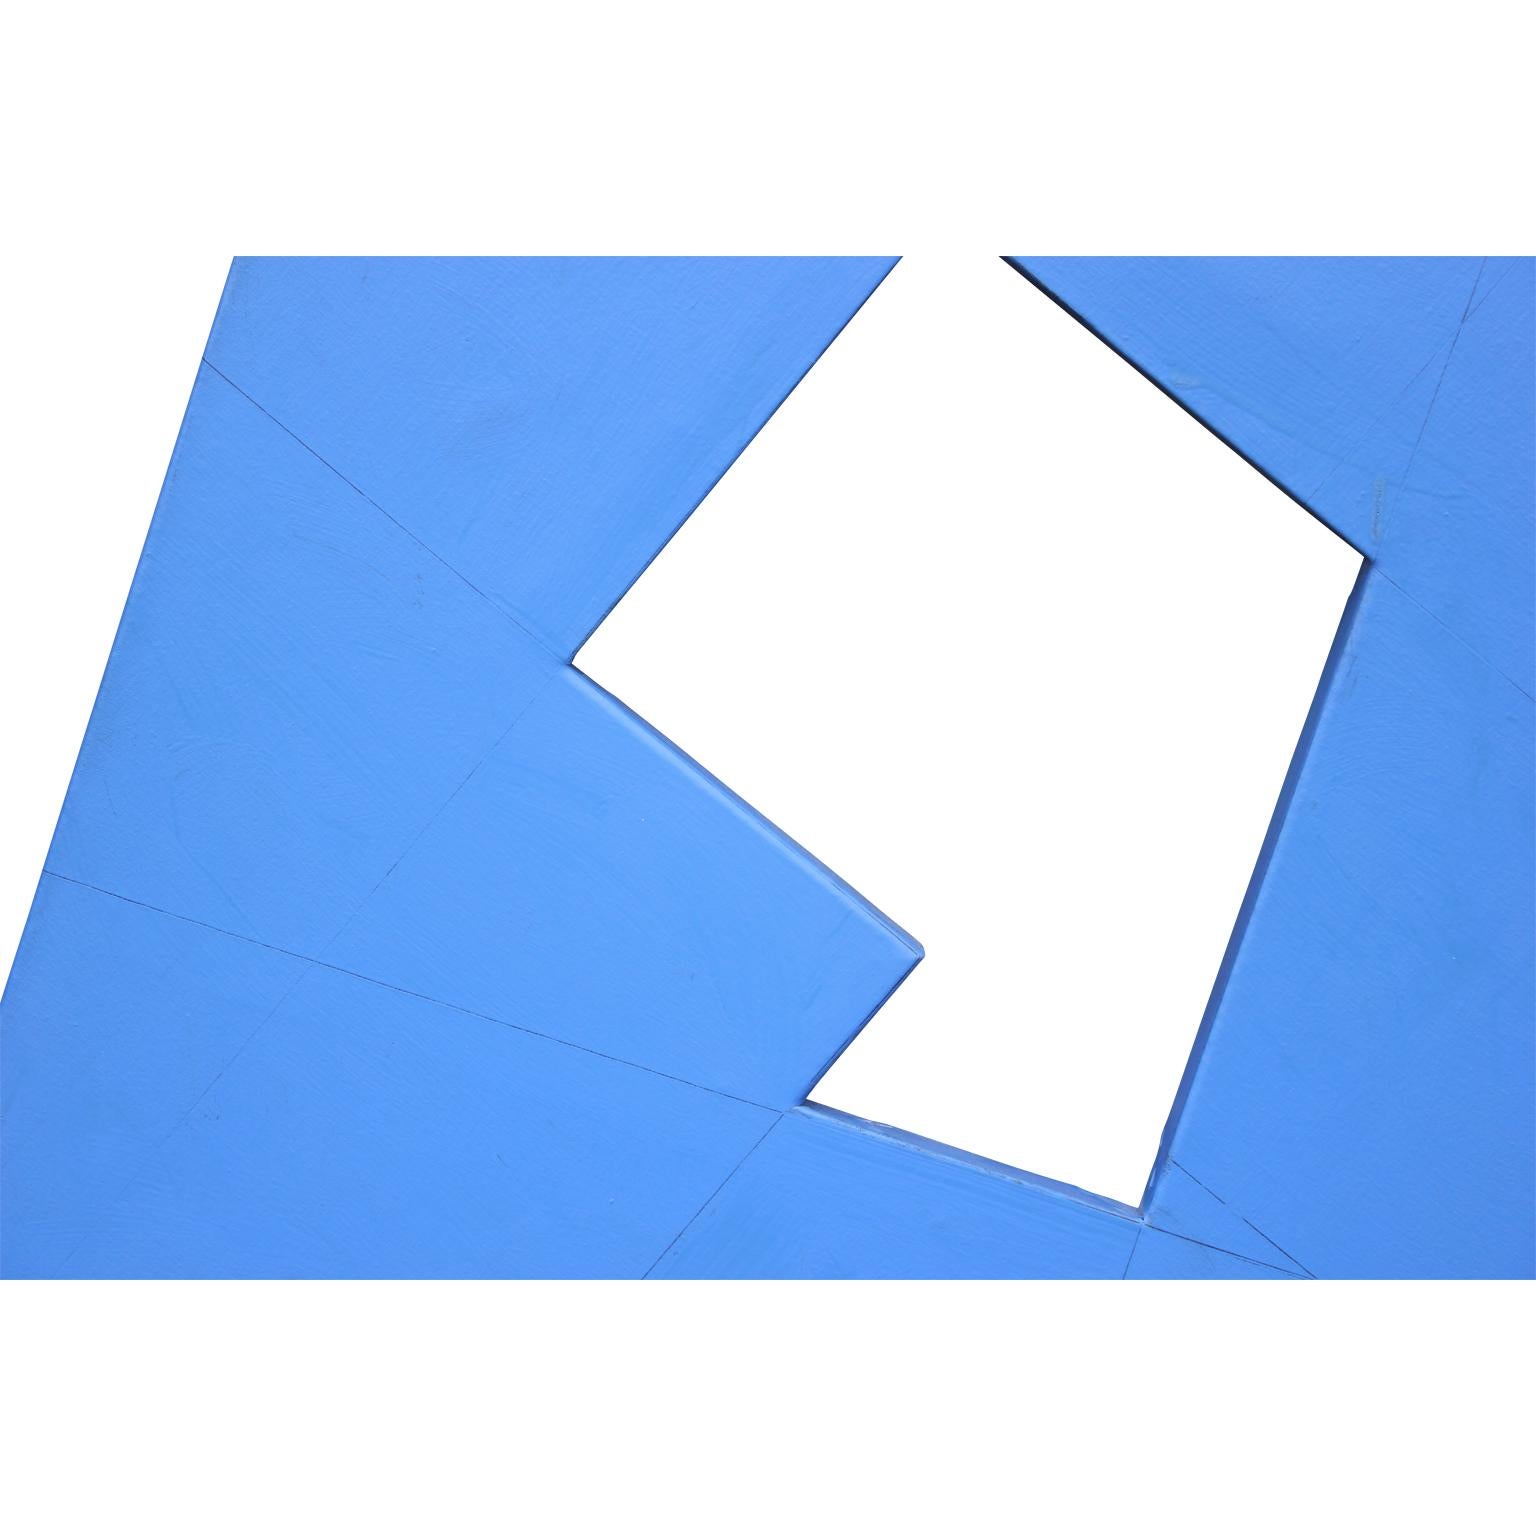 Blue Plot - Blue Geometric Abstract Painting - Sculpture by Gary Jurysta